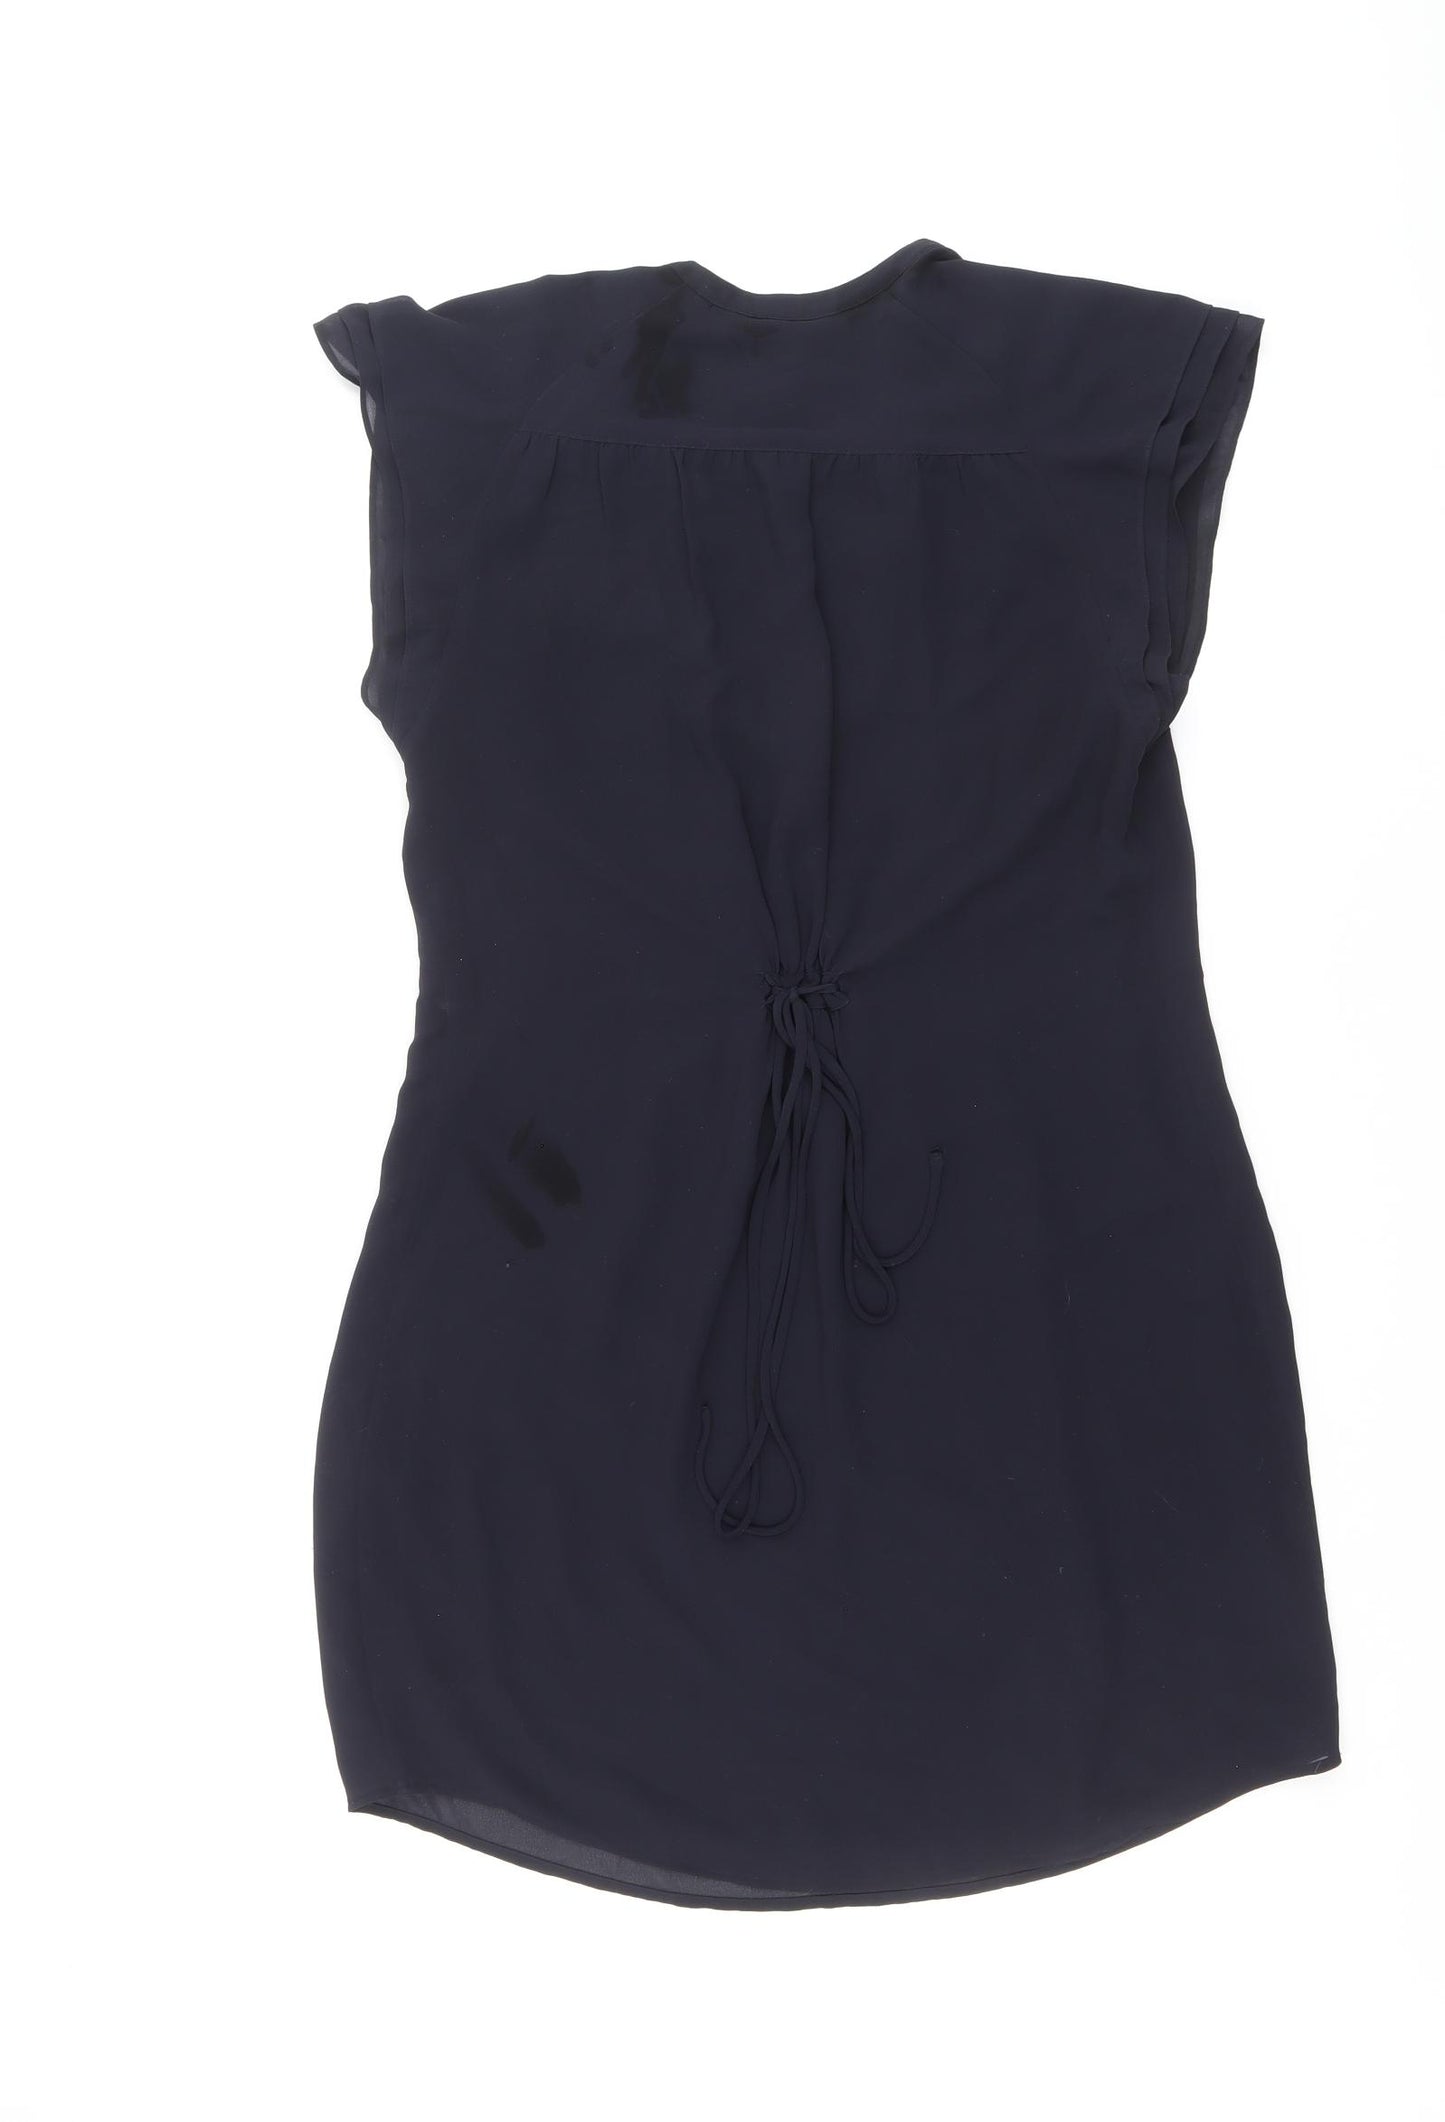 H&M Womens Black Polyester A-Line Size 14 V-Neck Button